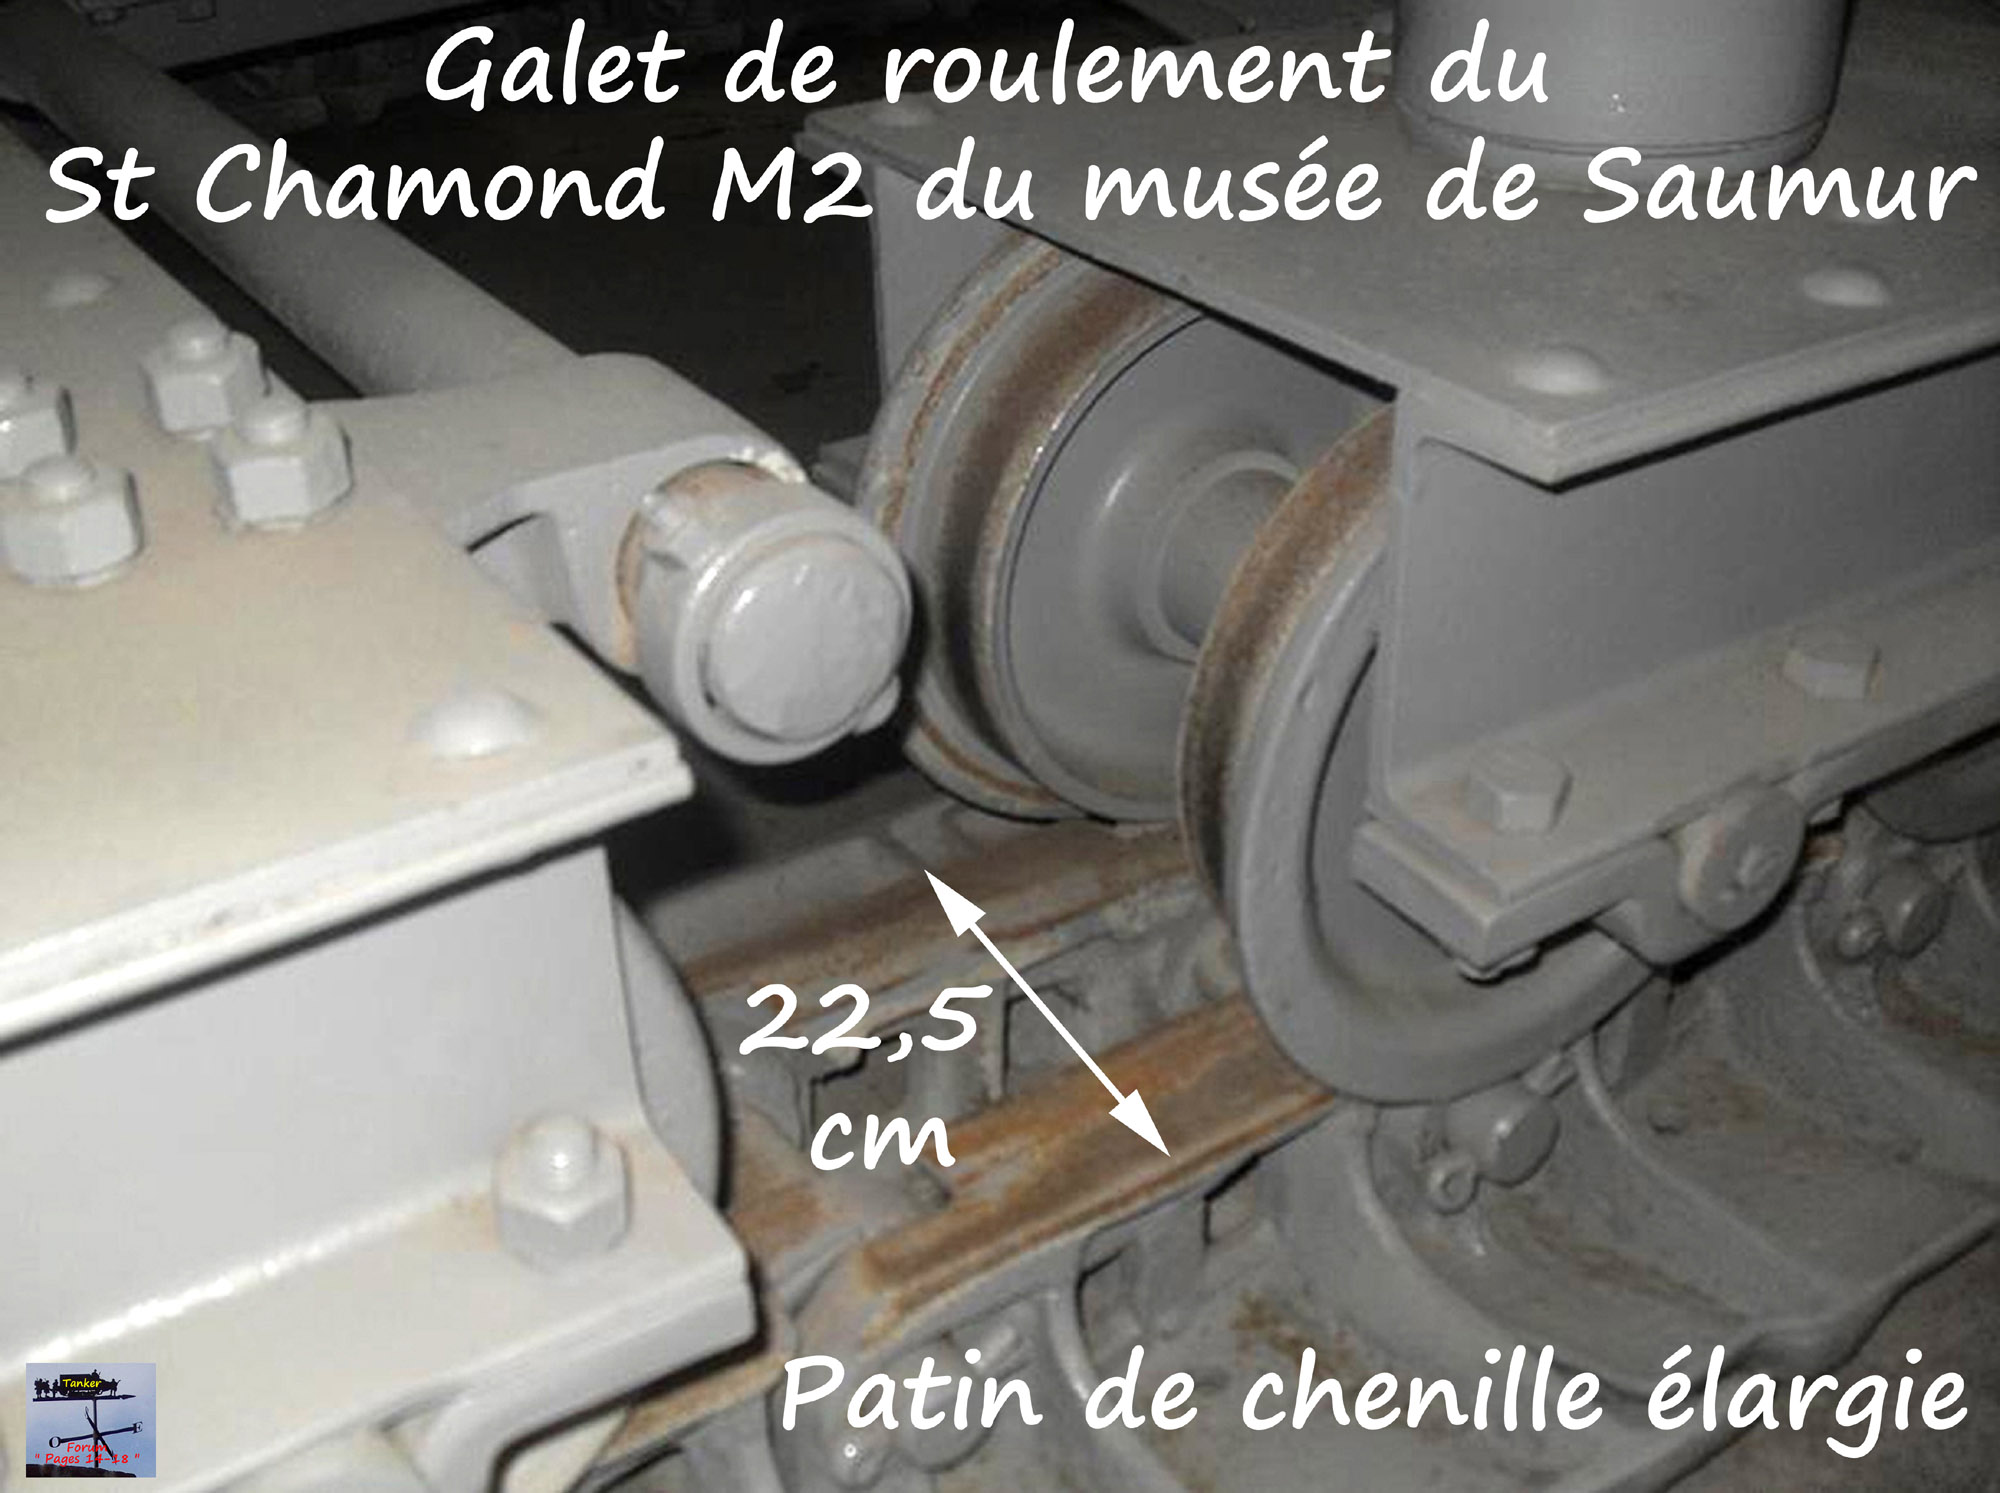 15 - Saint Chamond M2 - Détail.jpg